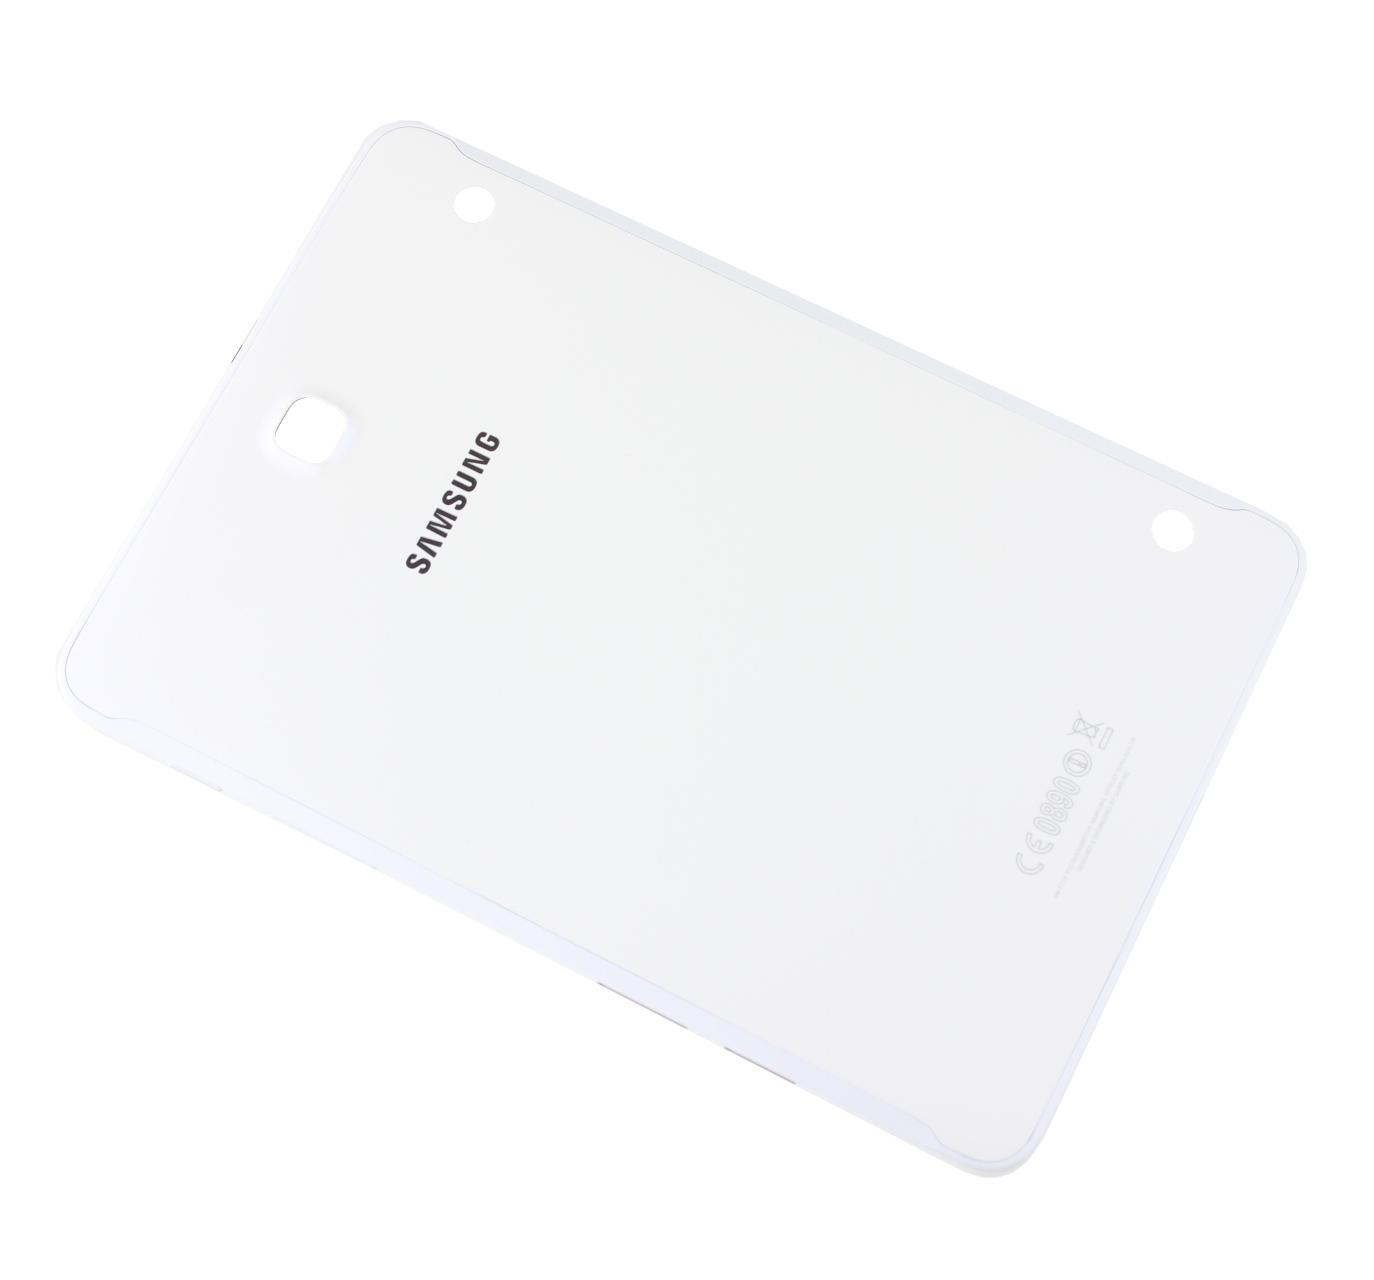 Originál kryt baterie Samsung Galaxy Tab S2 8.0 4G